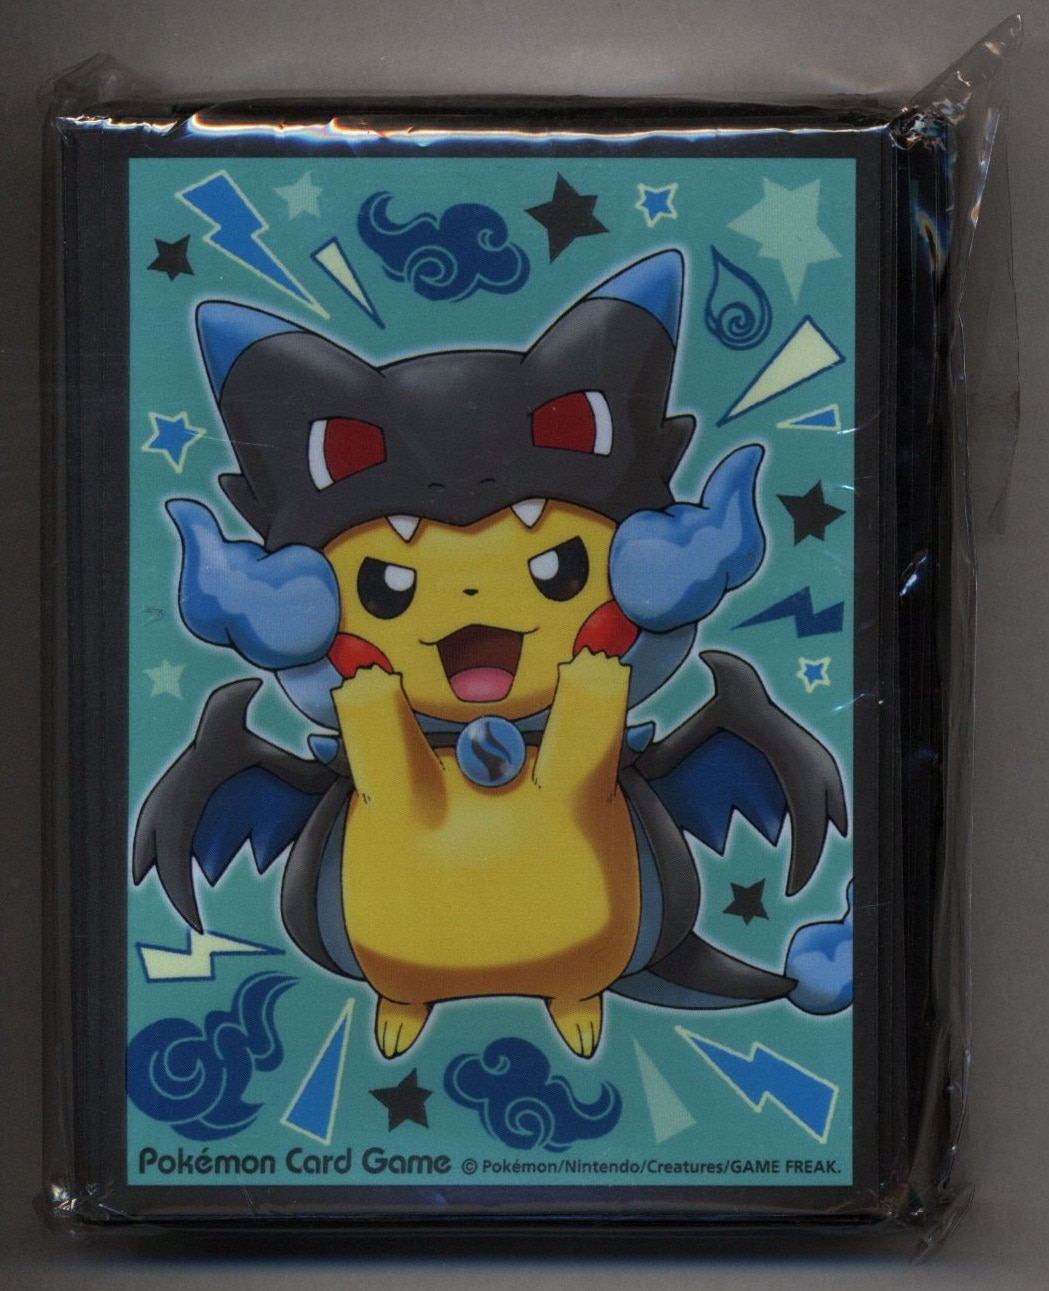 Card Sleeve poncho Pikachu Charizard X 